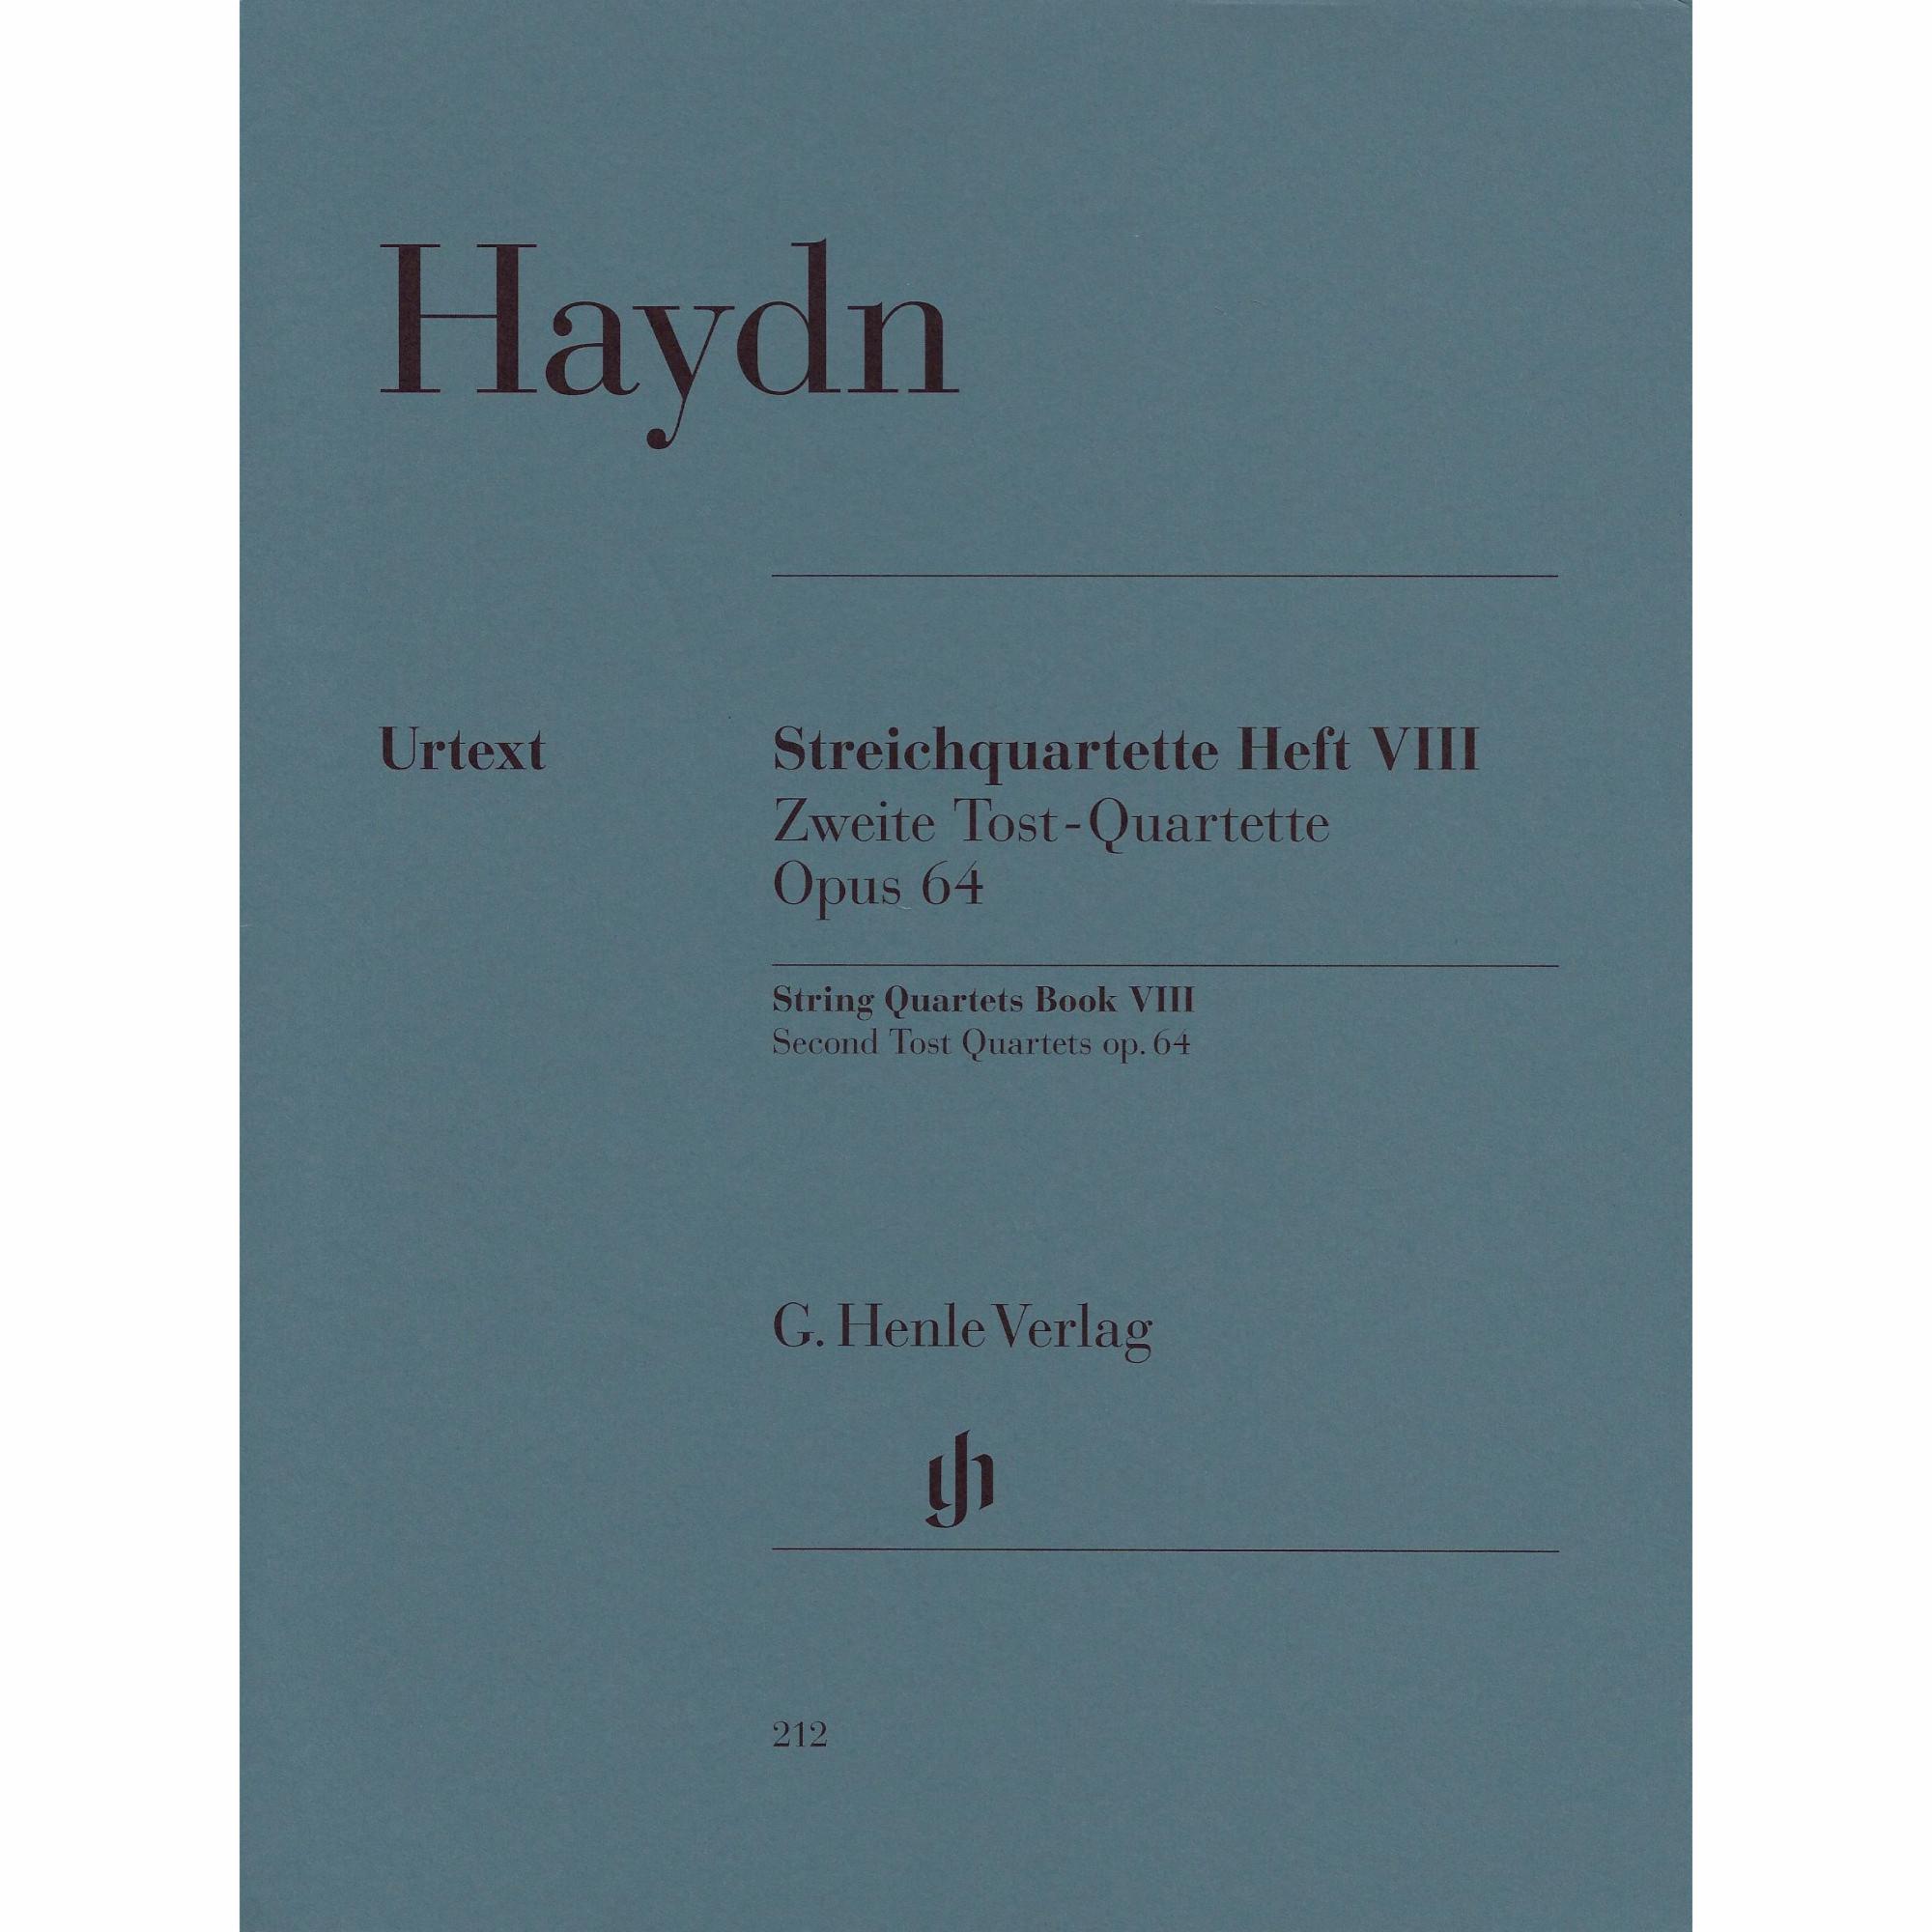 Haydn -- String Quartets, Book VIII